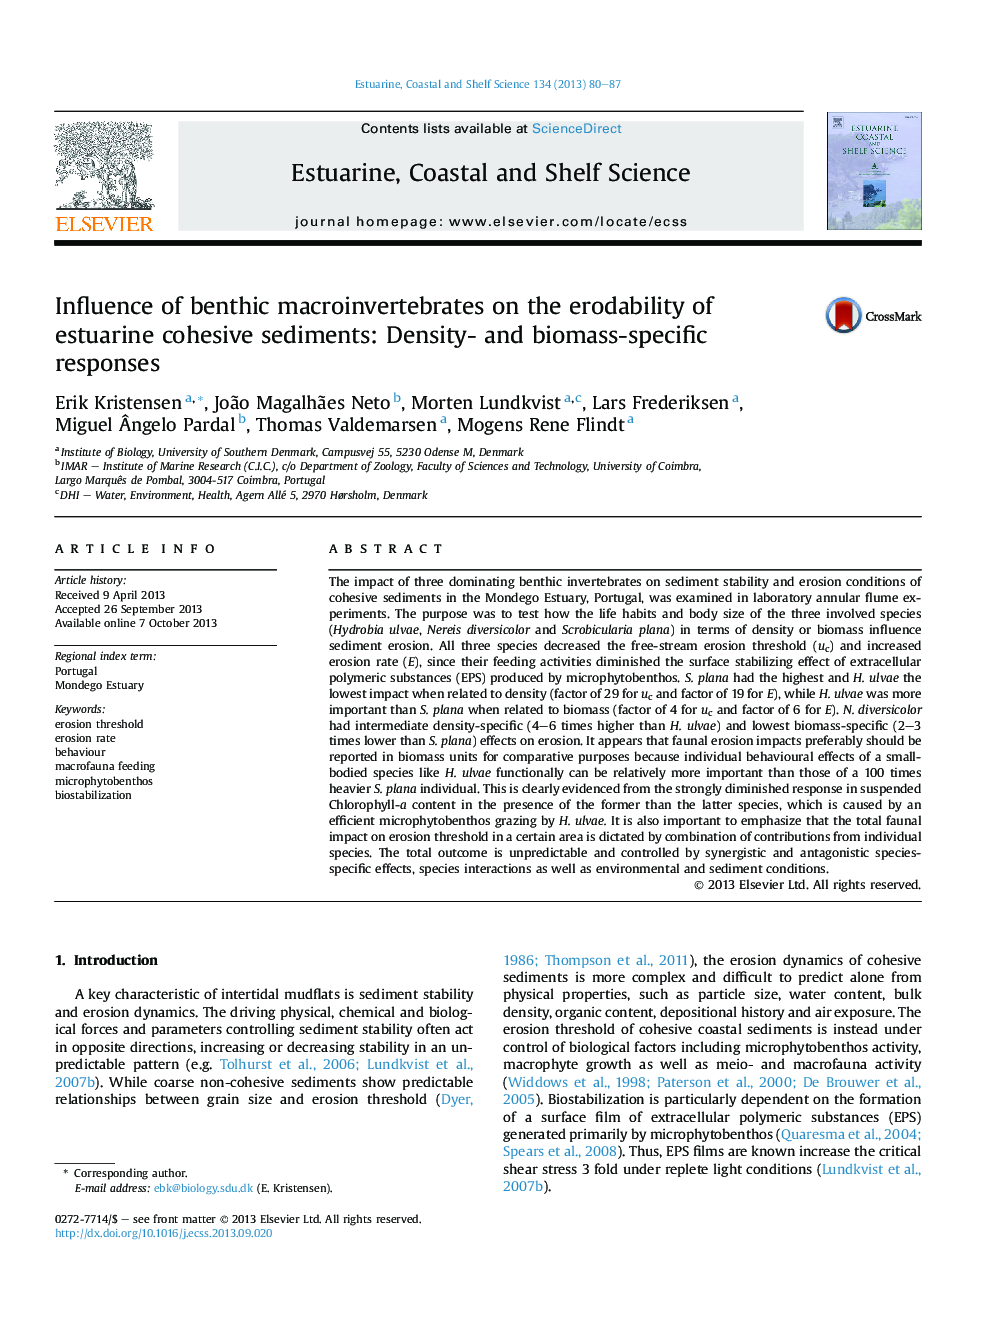 Influence of benthic macroinvertebrates on the erodability of estuarine cohesive sediments: Density- and biomass-specific responses